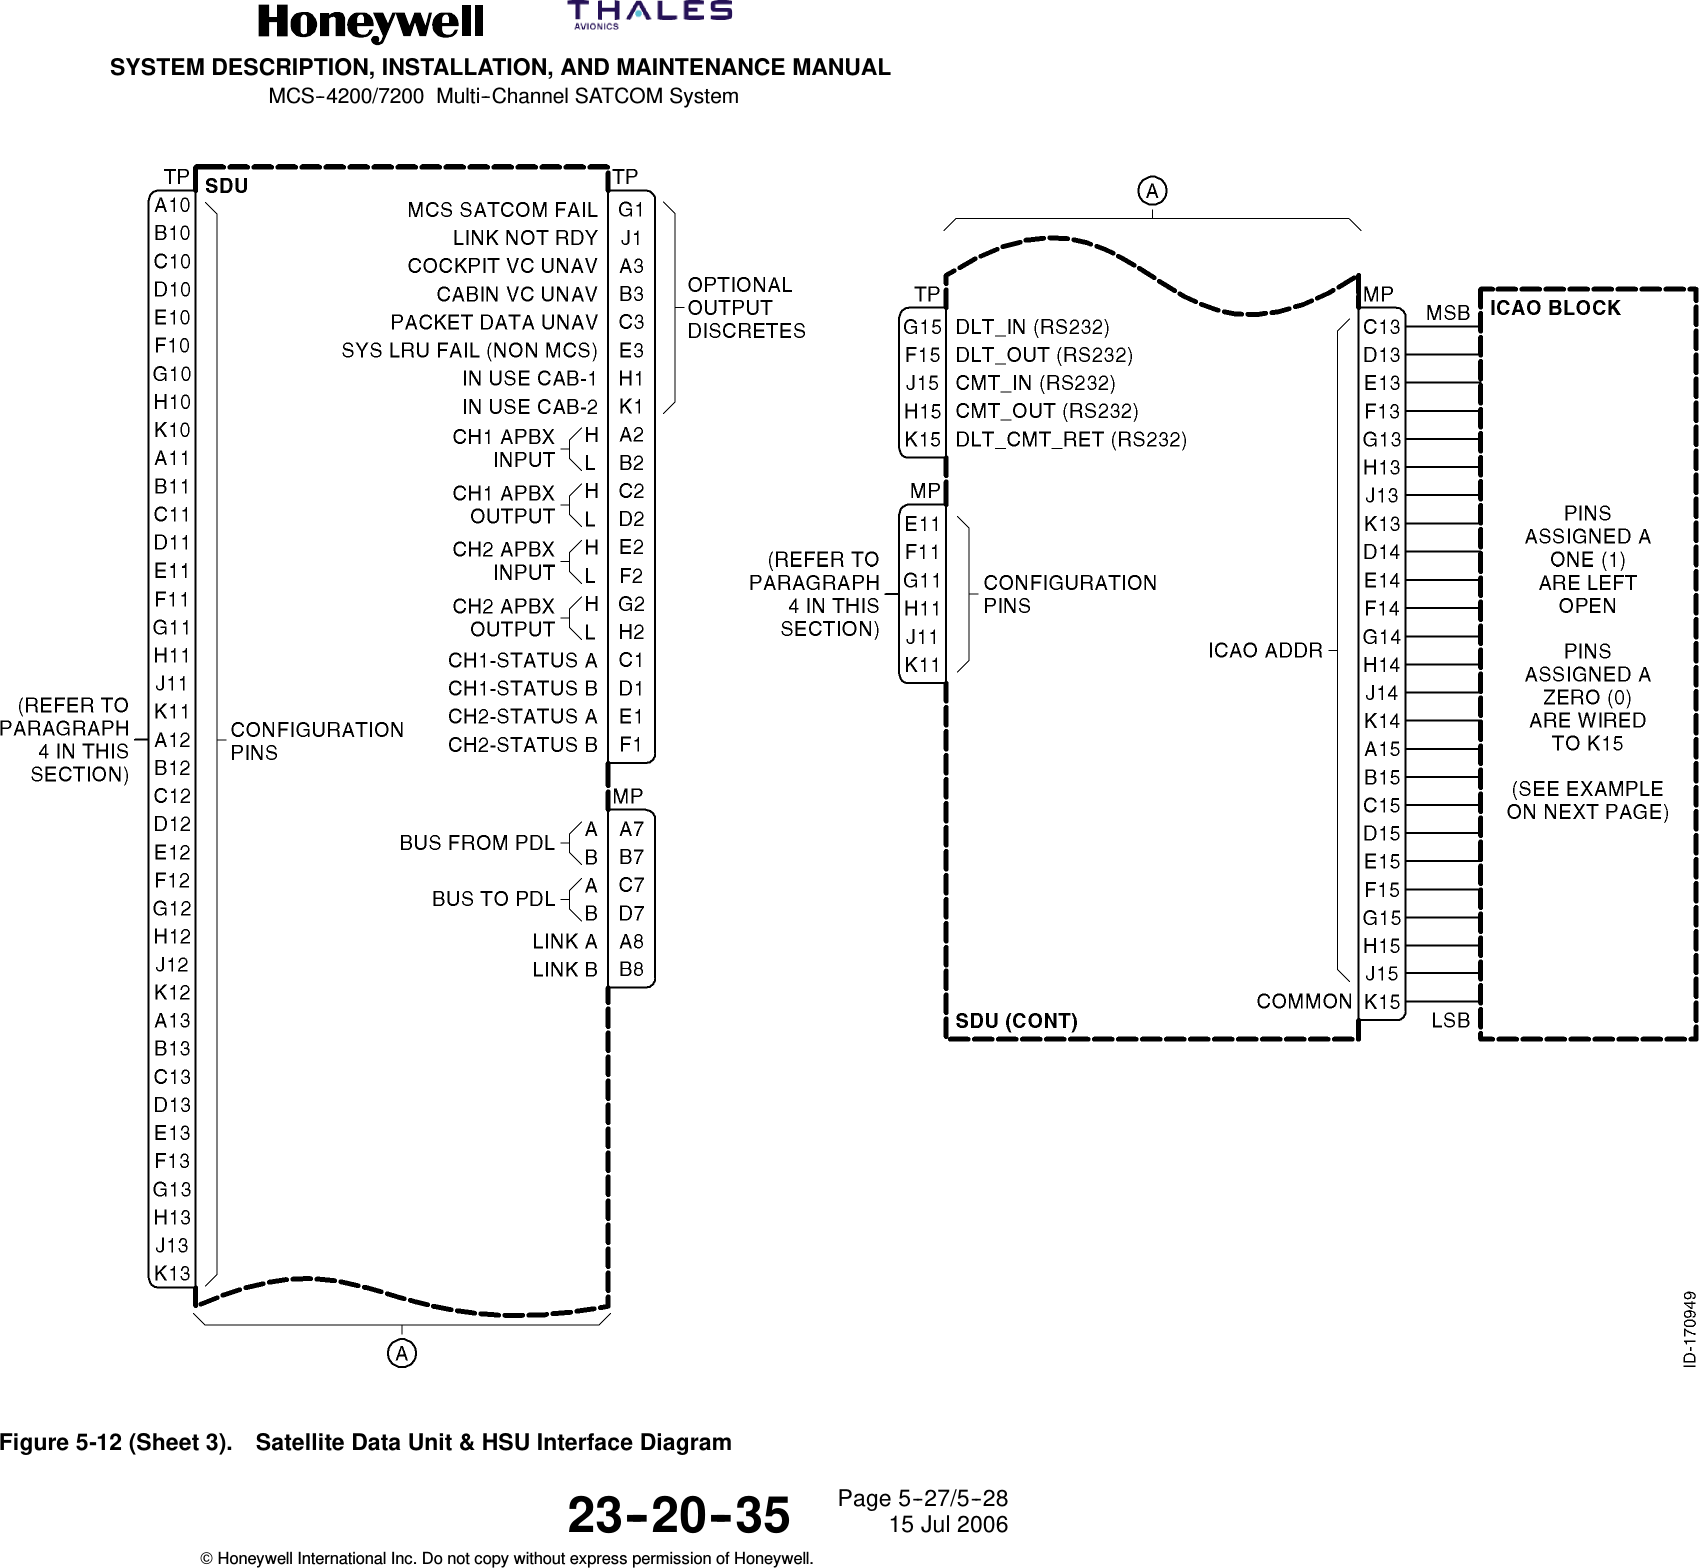 SYSTEM DESCRIPTION, INSTALLATION, AND MAINTENANCE MANUALMCS--4200/7200 Multi--Channel SATCOM System23--20--35 15 Jul 2006Honeywell International Inc. Do not copy without express permission of Honeywell.Page 5--27/5--28Figure 5-12 (Sheet 3). Satellite Data Unit &amp; HSU Interface Diagram